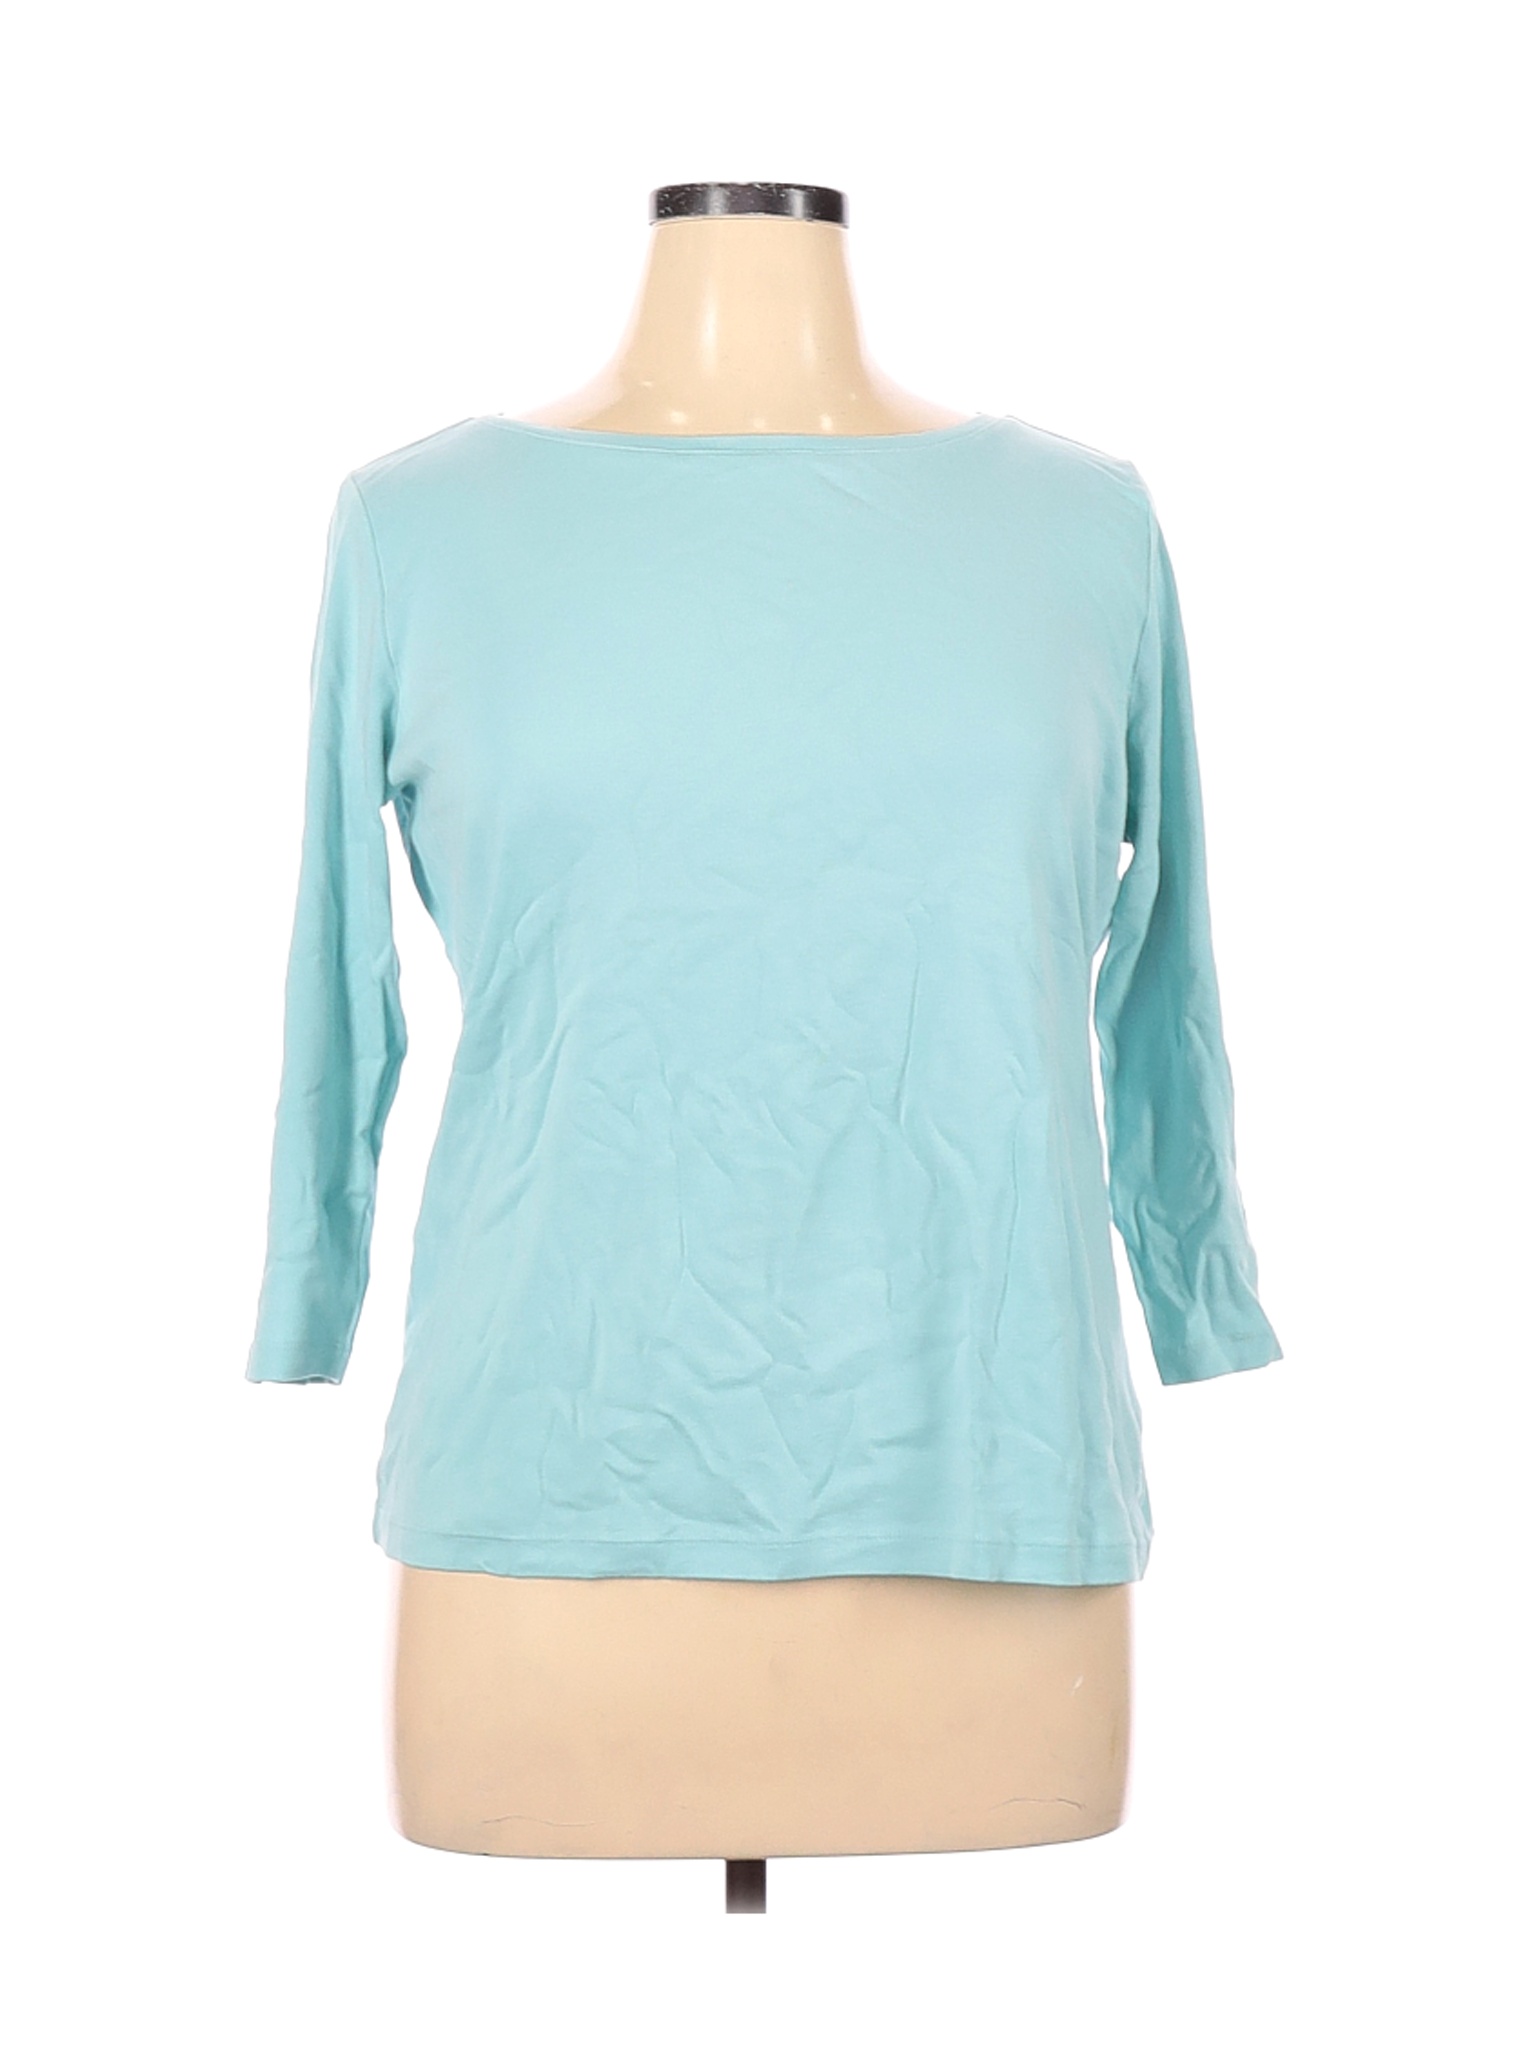 Talbots Women Blue 3/4 Sleeve T-Shirt 1X Plus | eBay